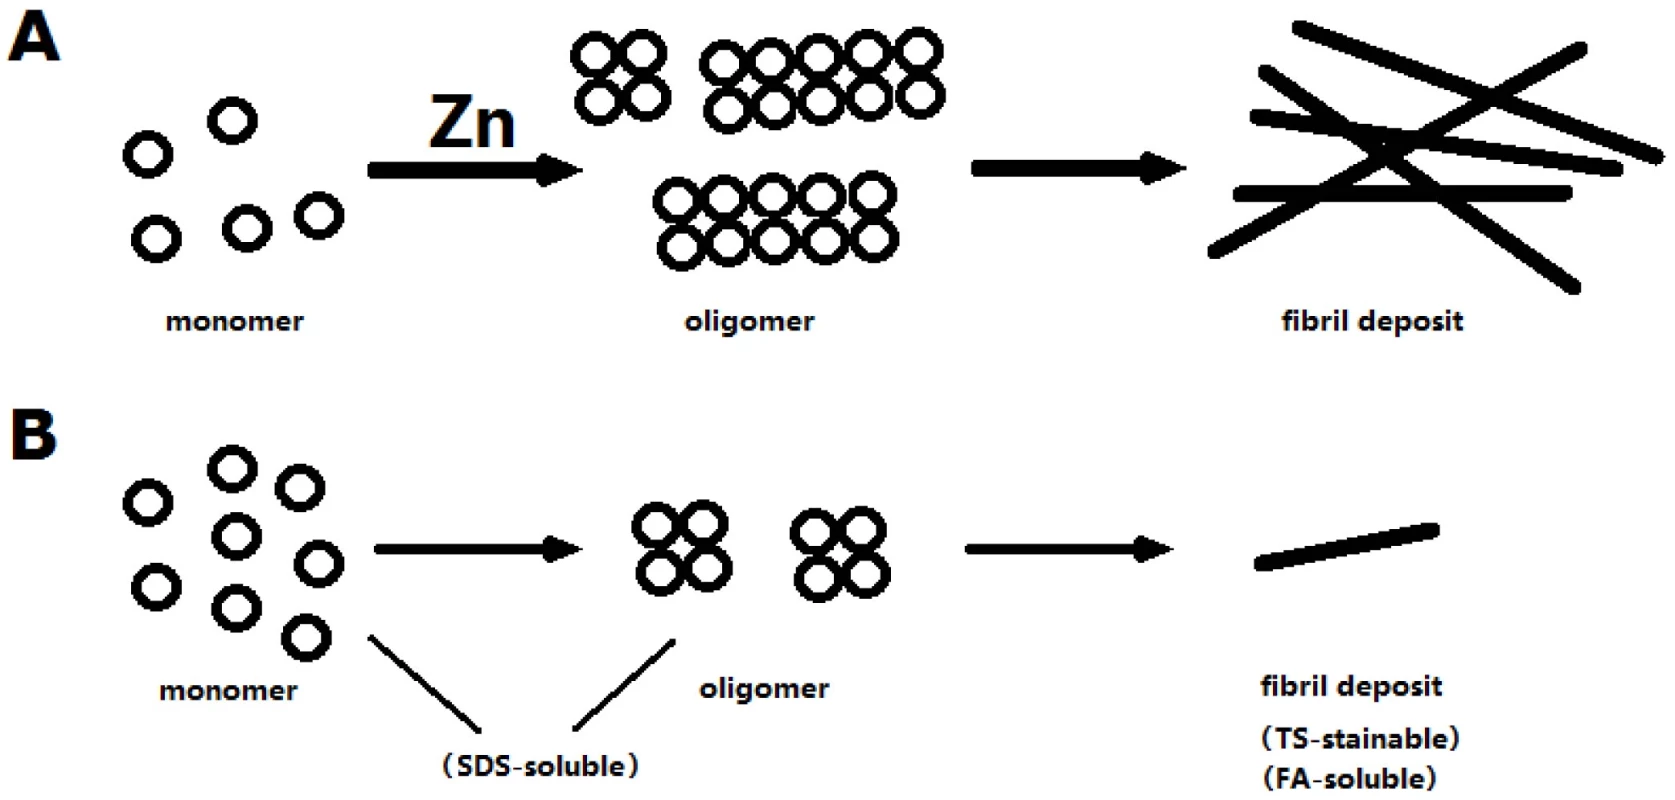 A model to explain zinc's effect on Aβ.